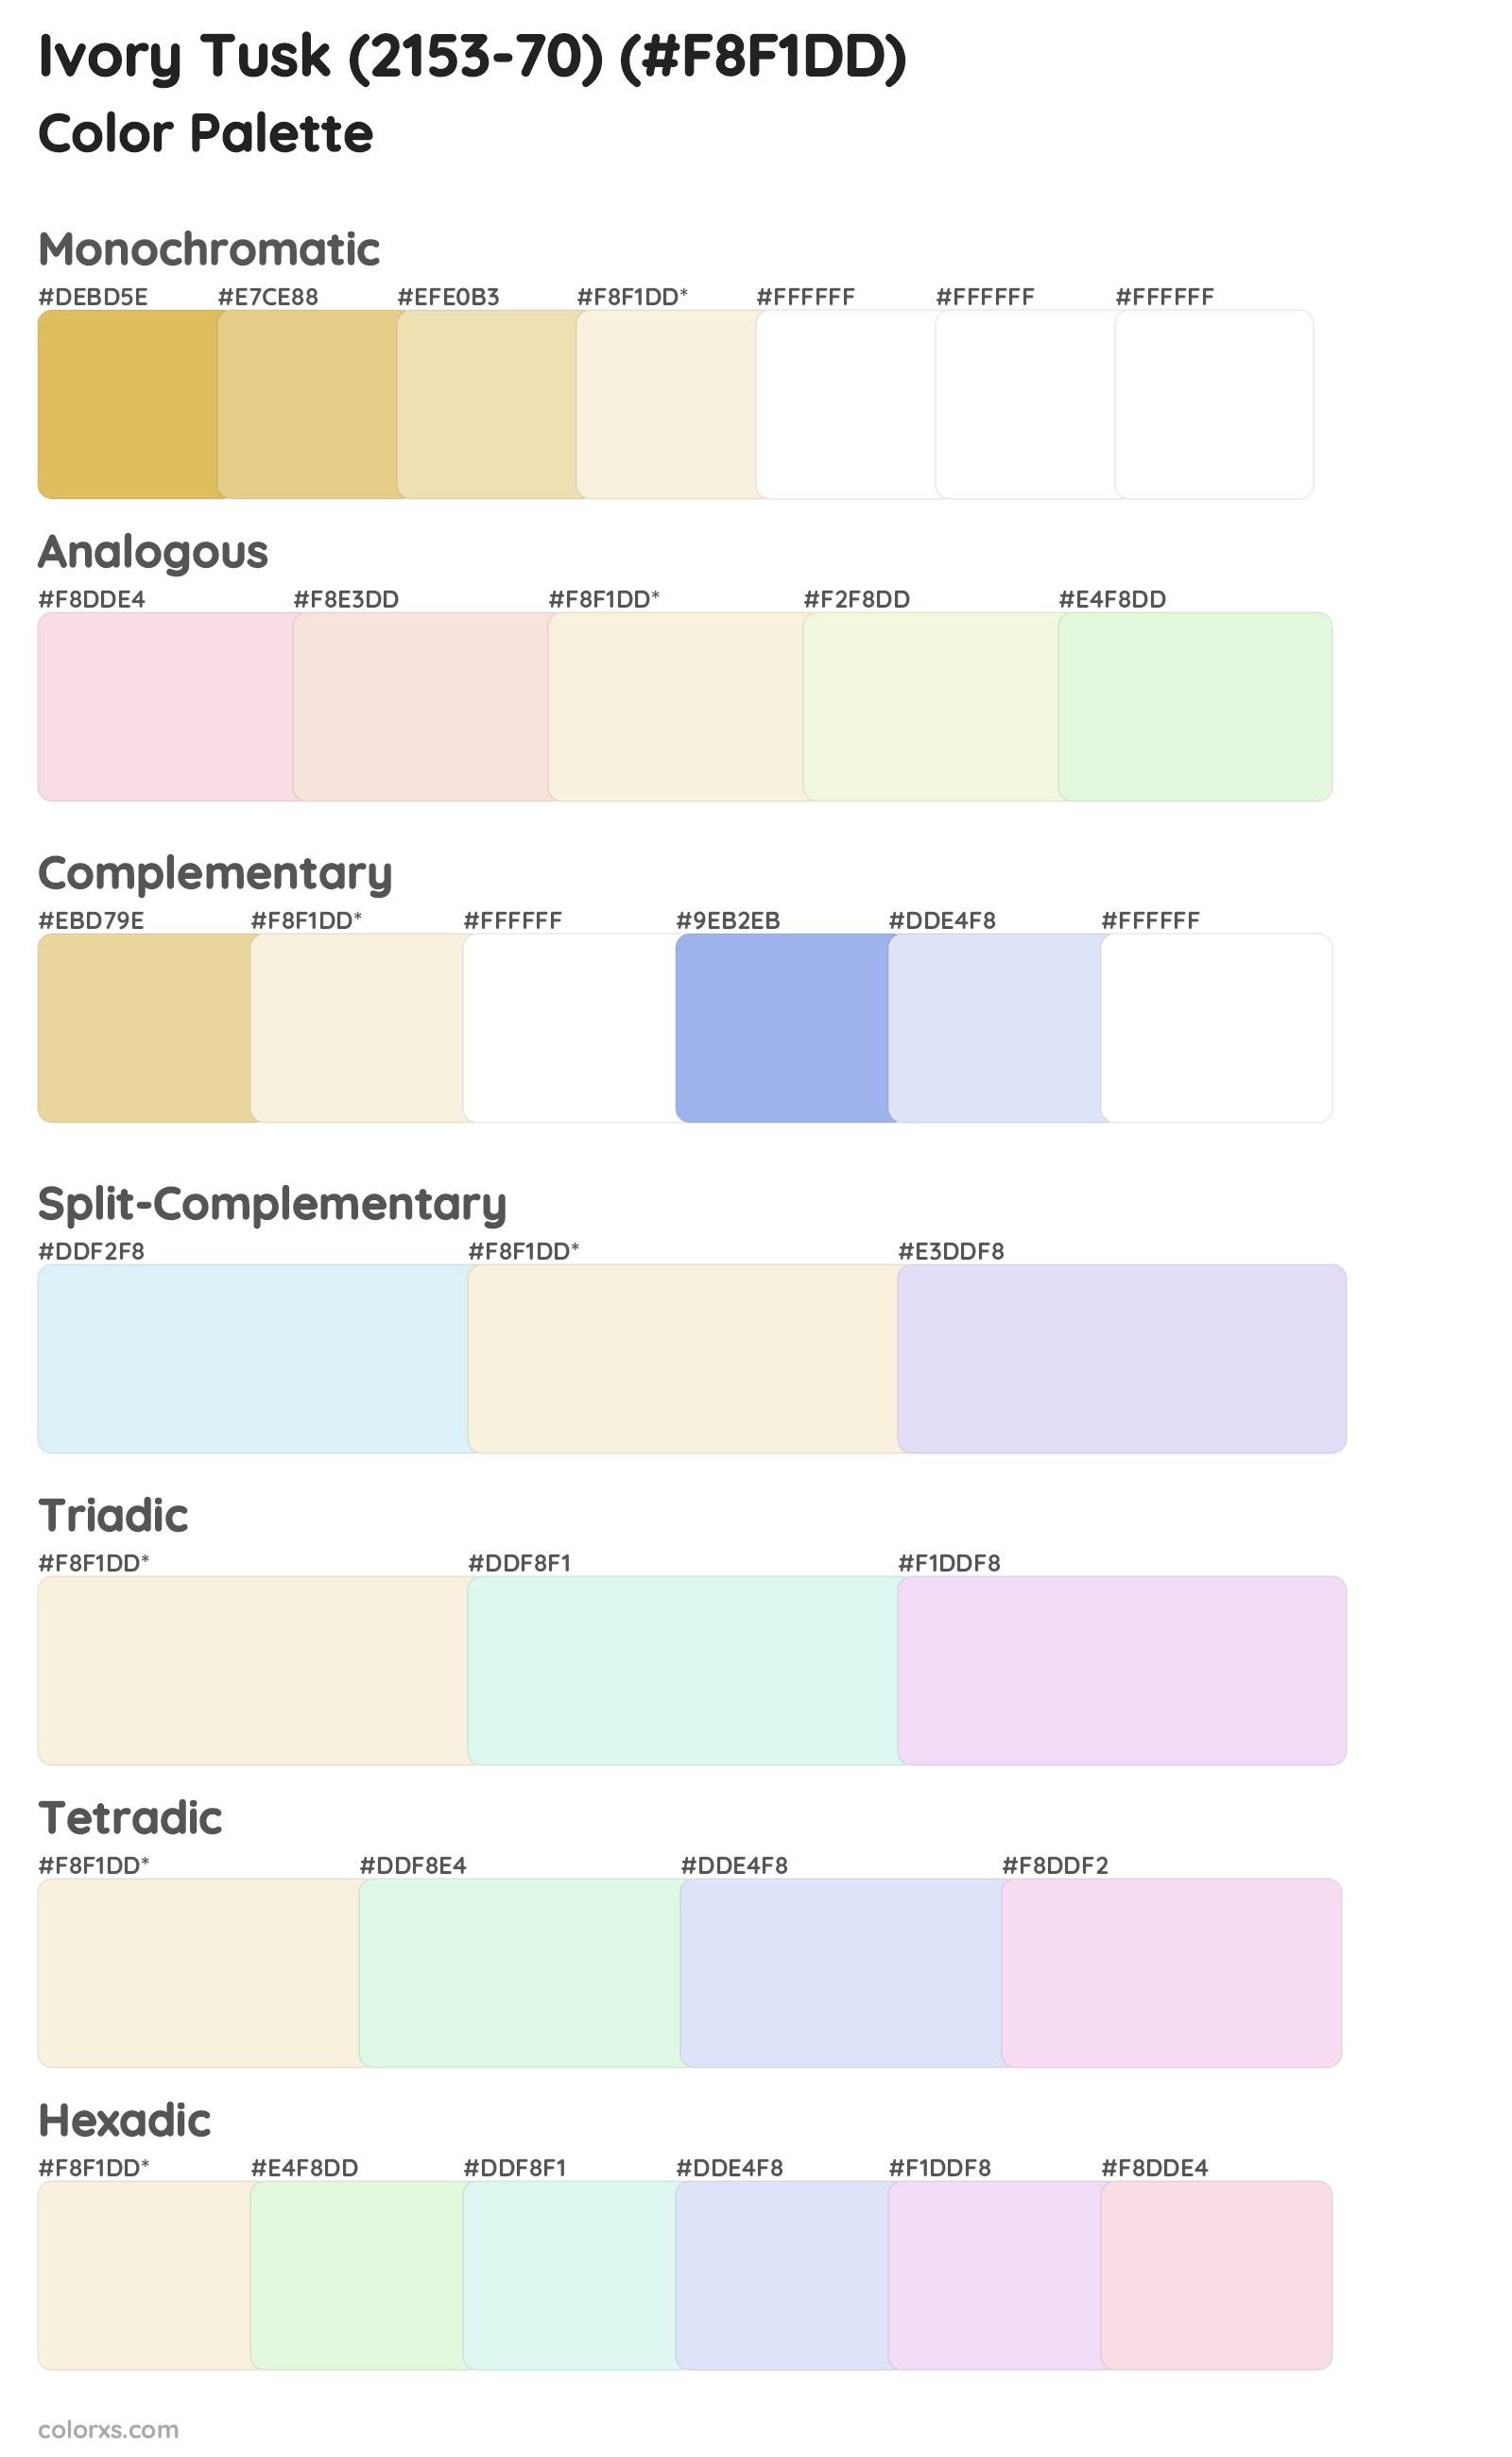 Ivory Tusk (2153-70) Color Scheme Palettes